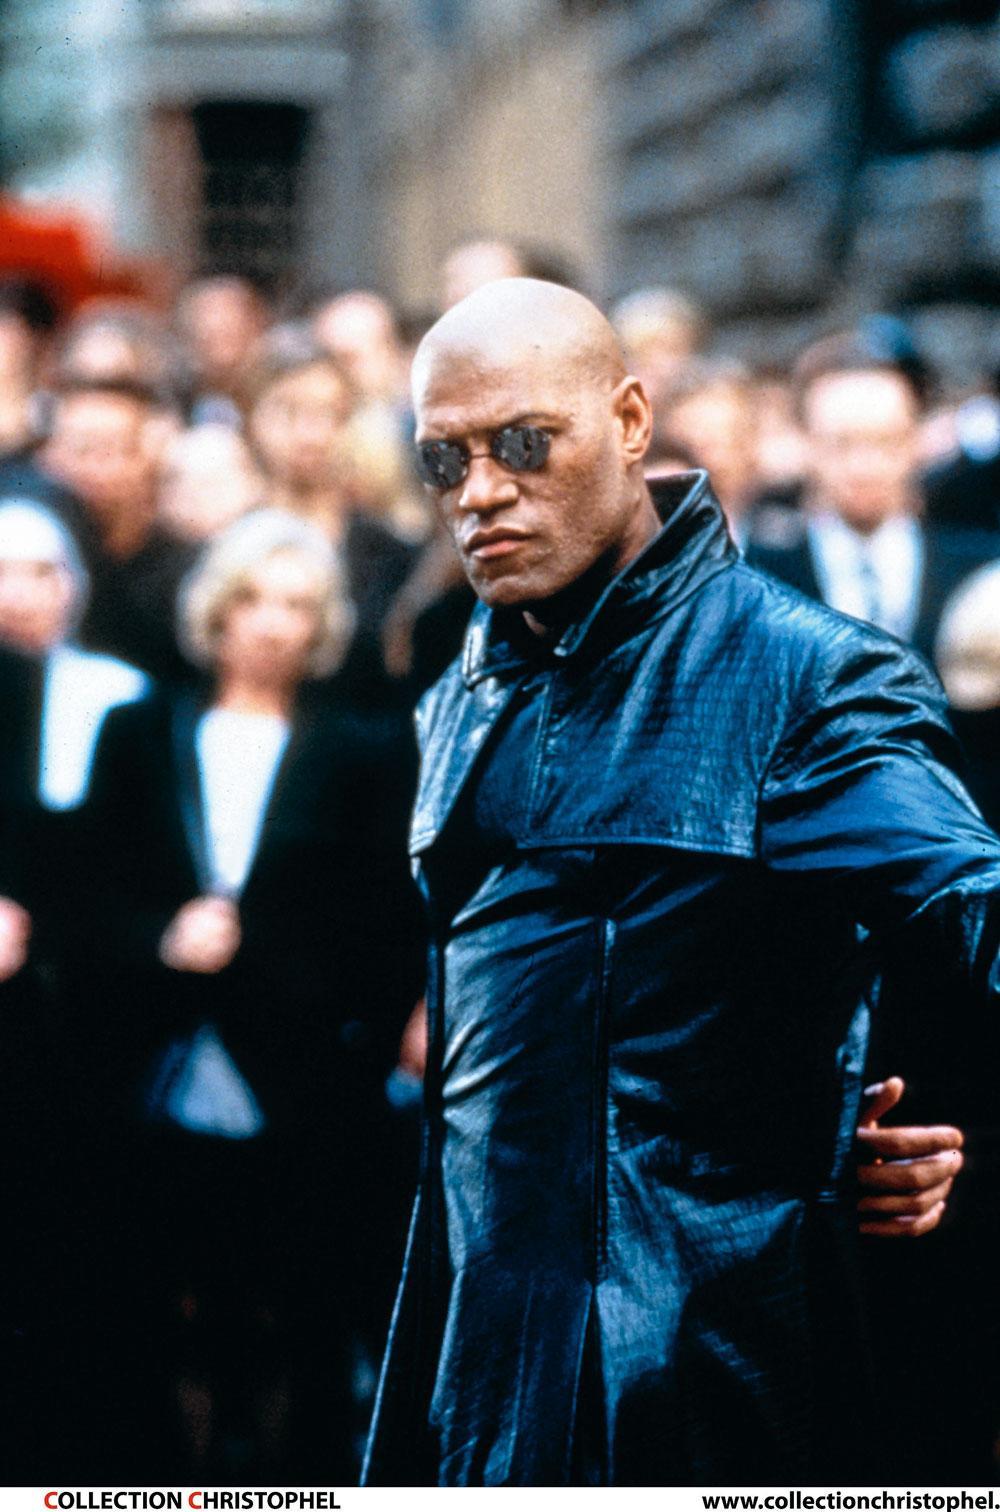 The Matrix, 1999